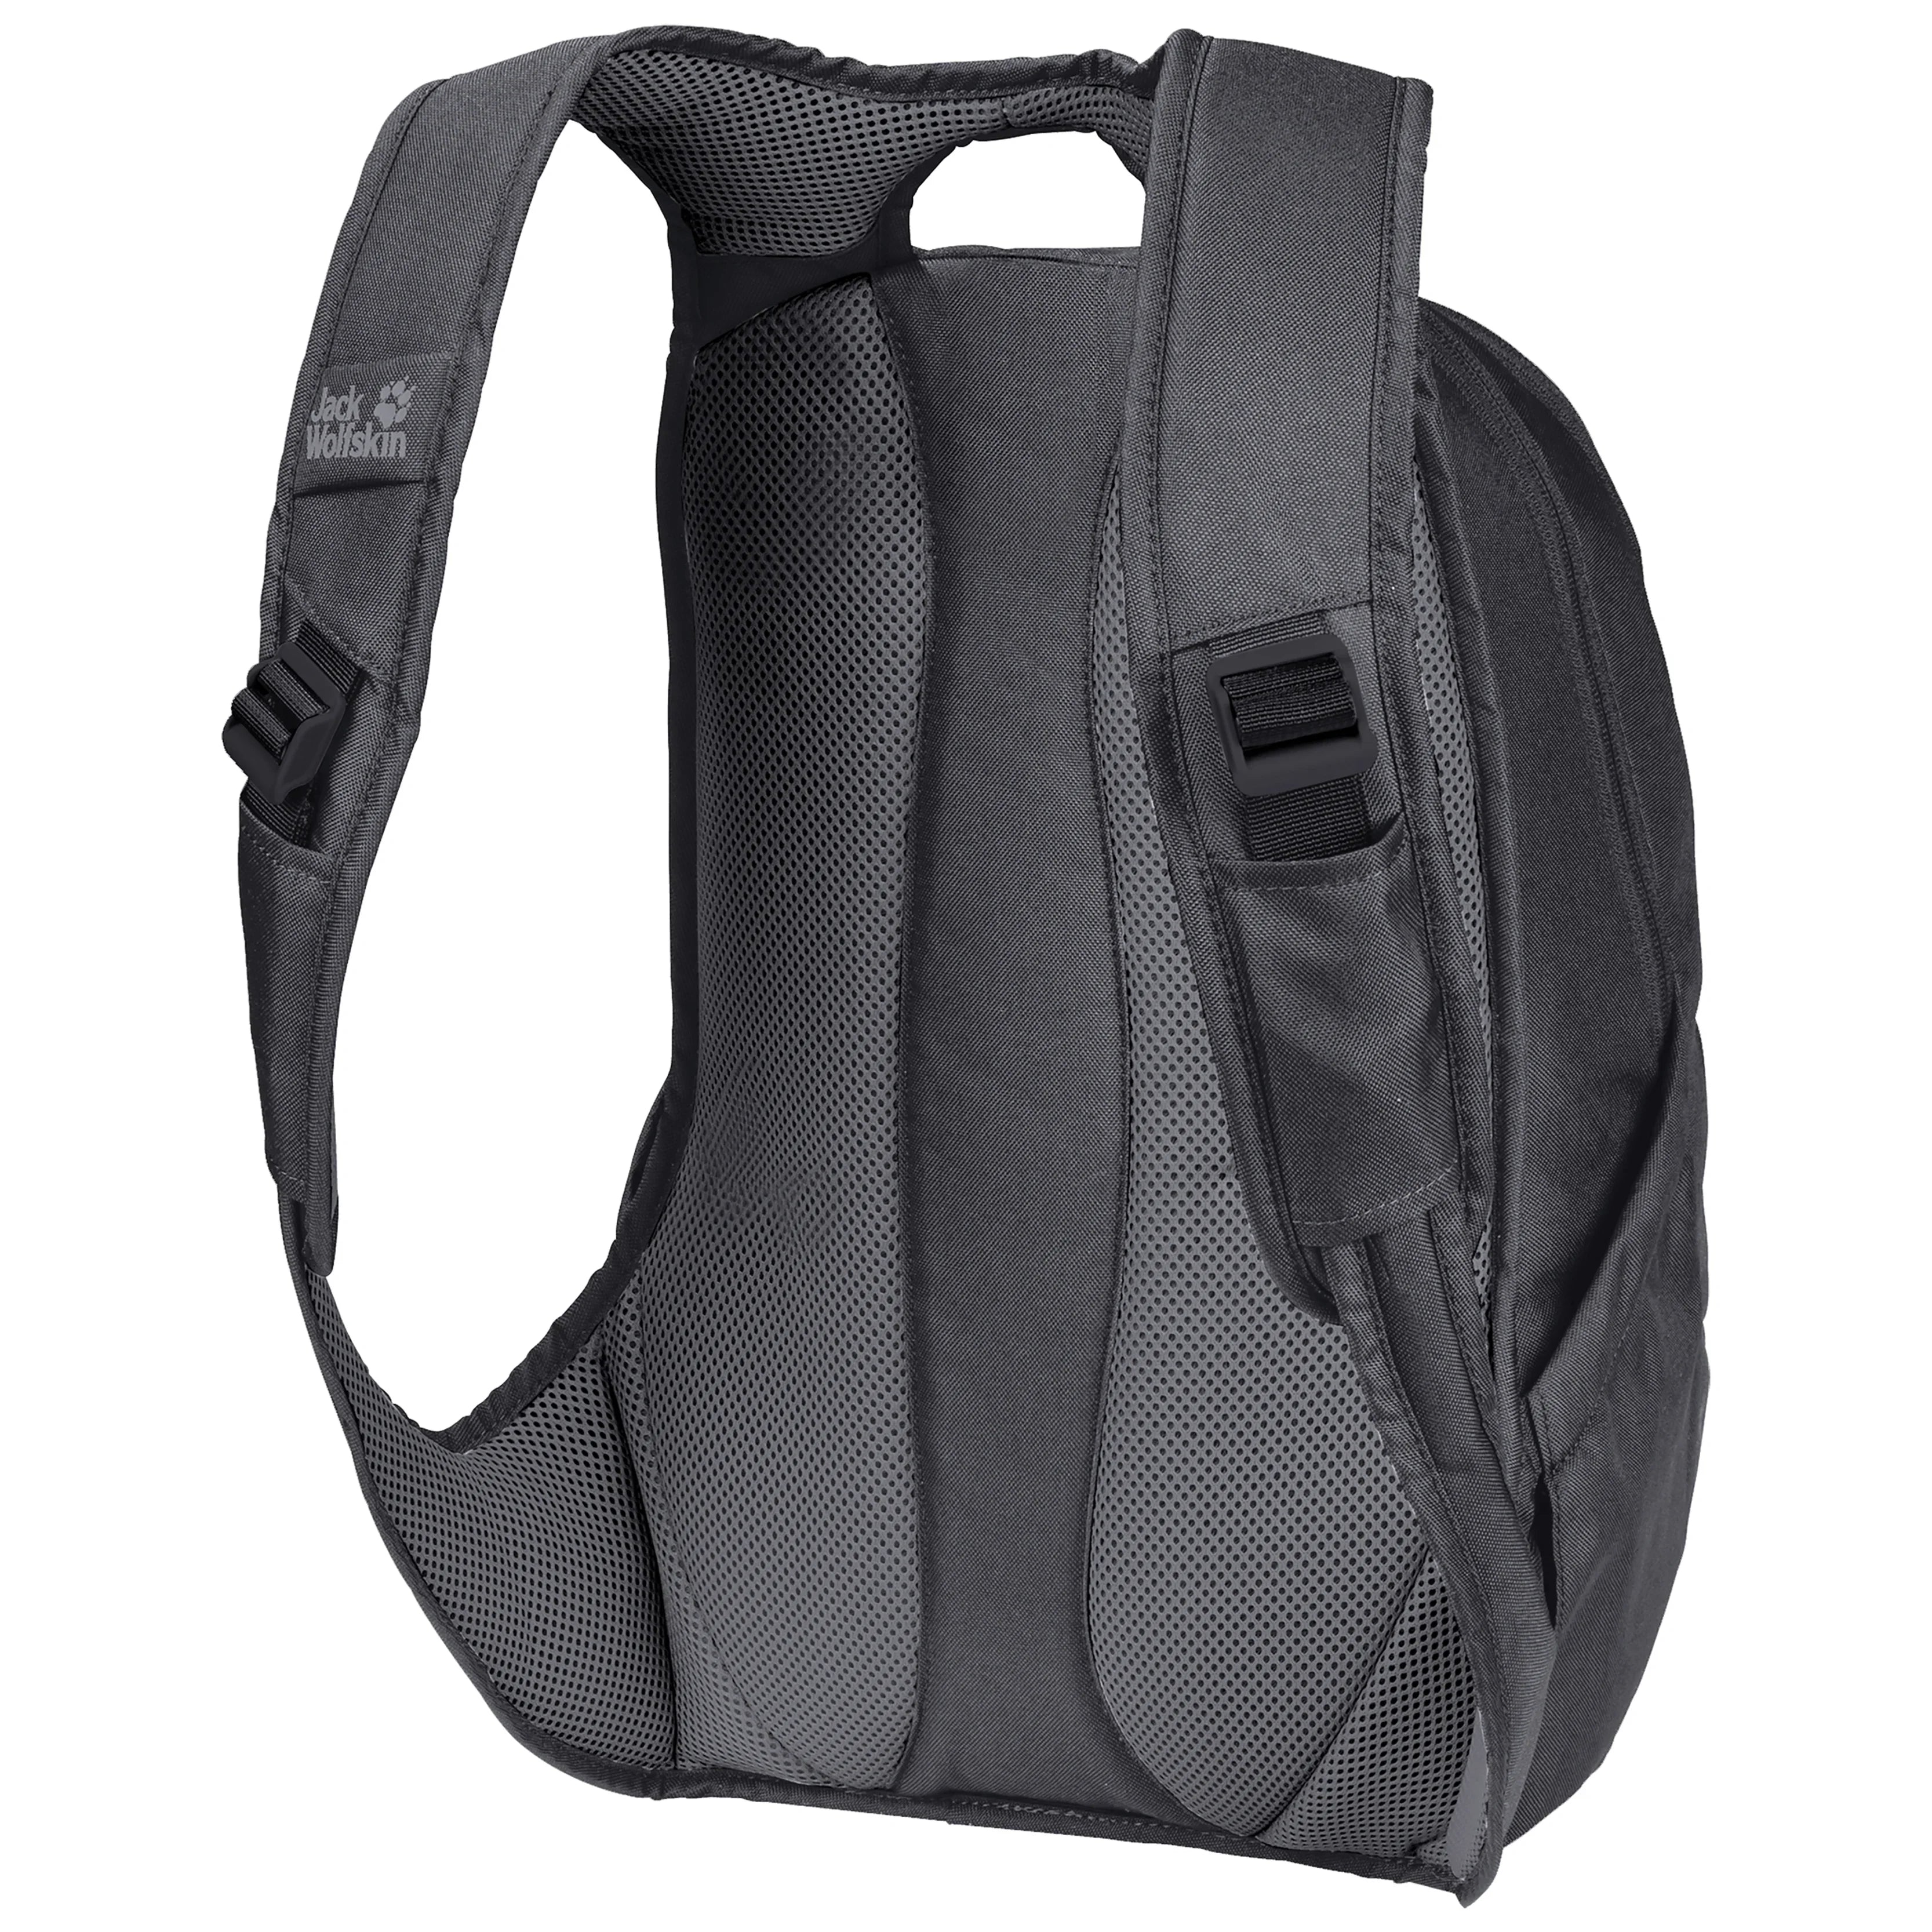 Jack Wolfskin Daypacks & Bags Savona De Luxe Backpack 43 cm - Teal Grey